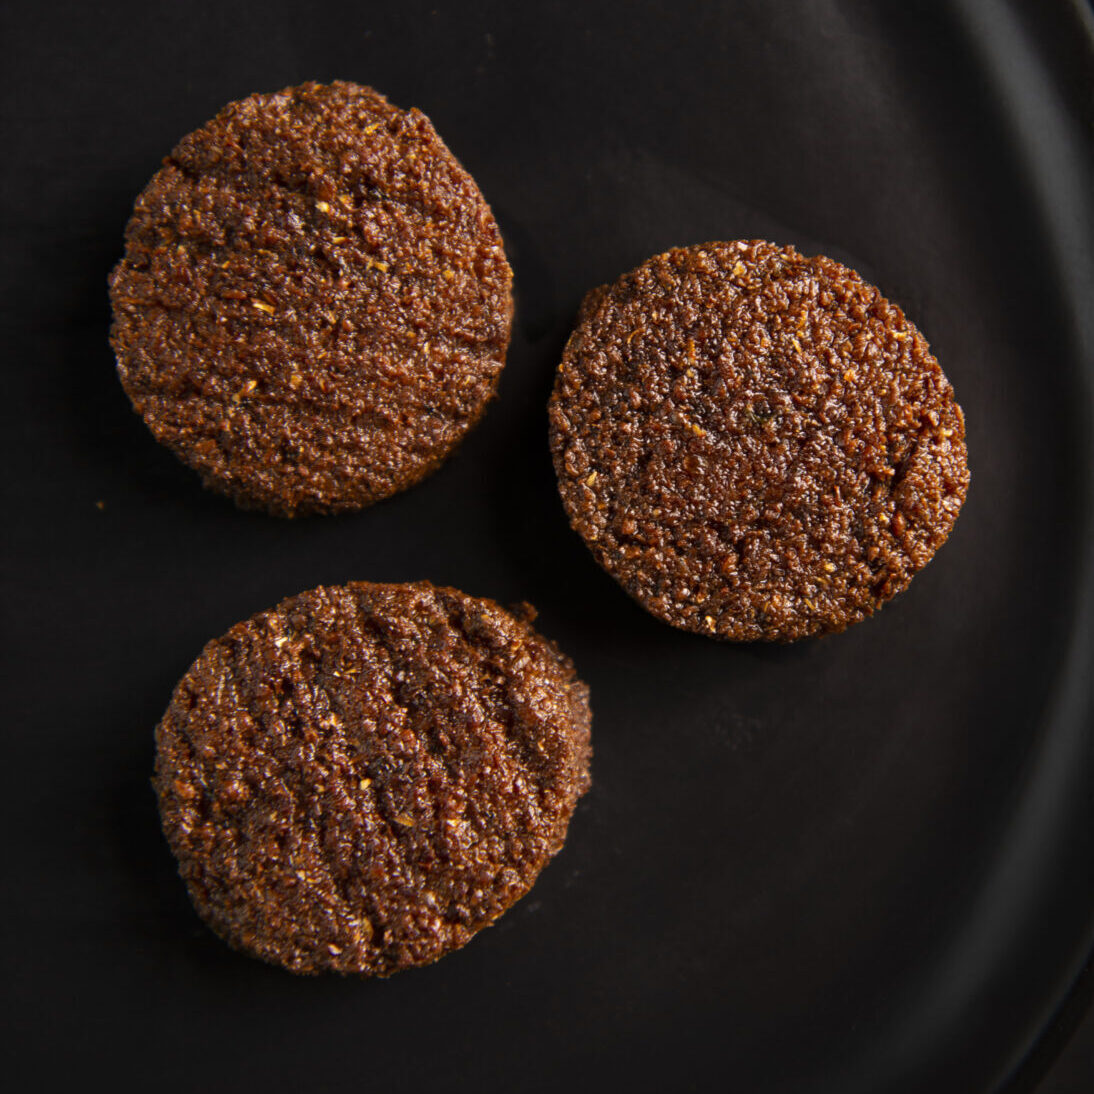 Three hamburger patties are sitting on a black plate.